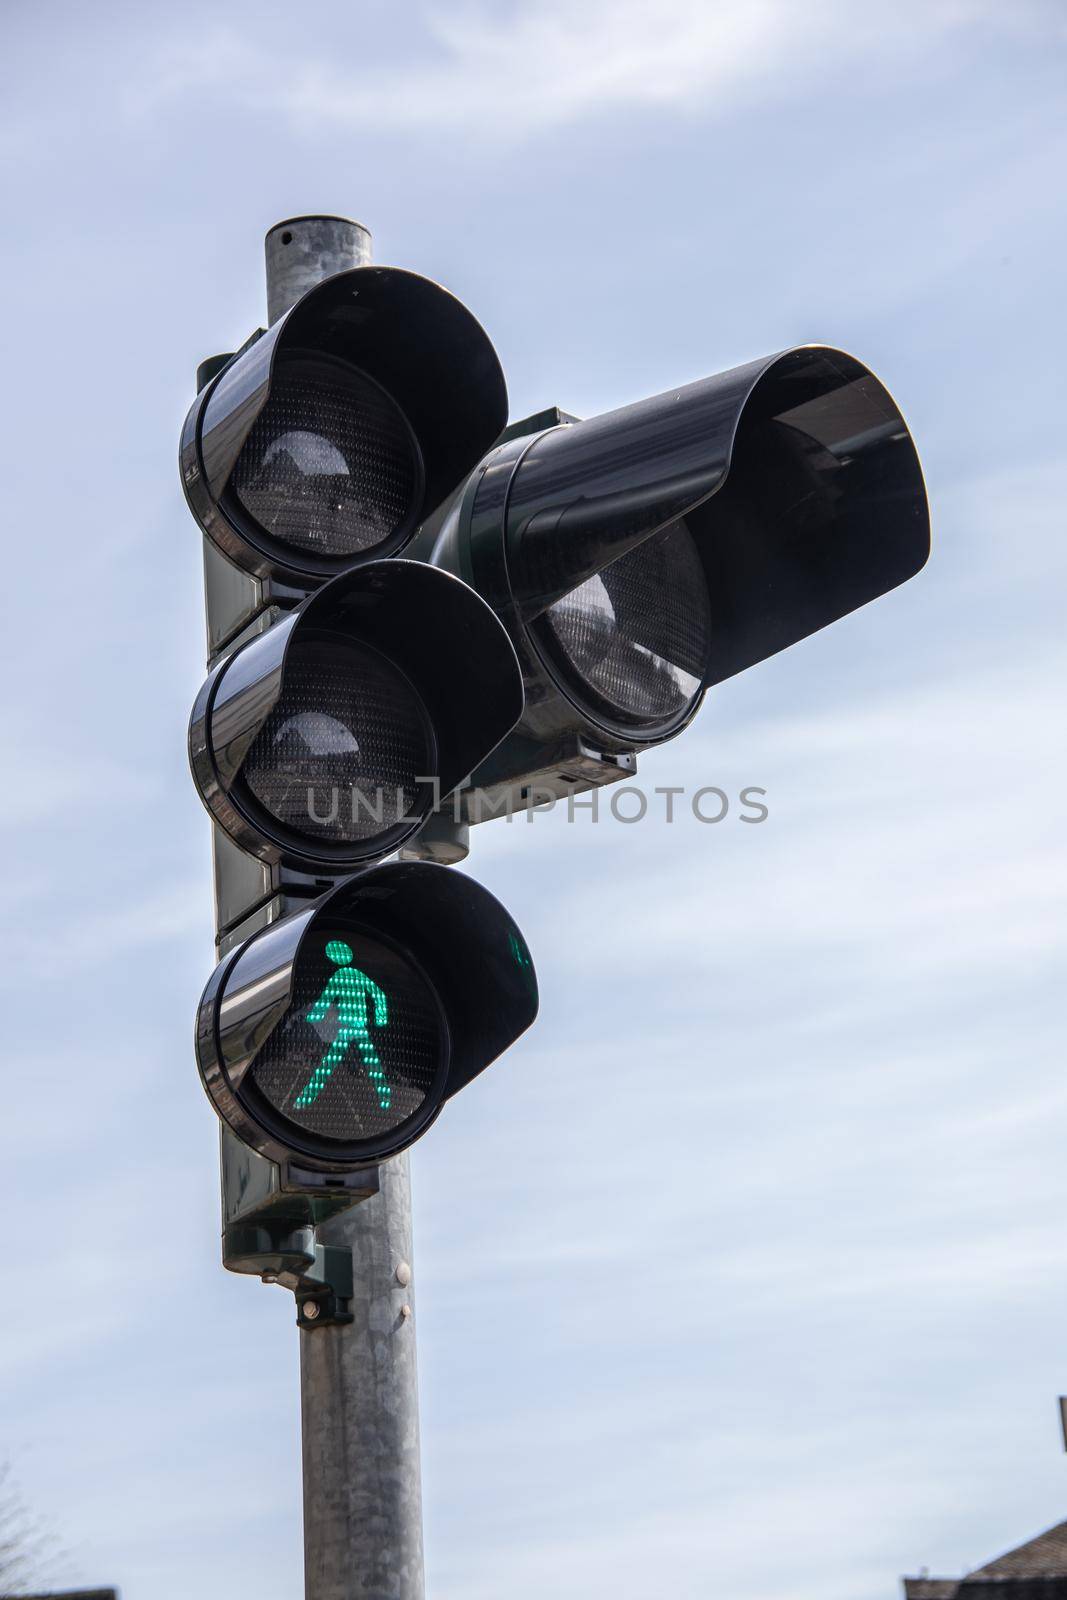 Traffic lights in road traffic by Dr-Lange